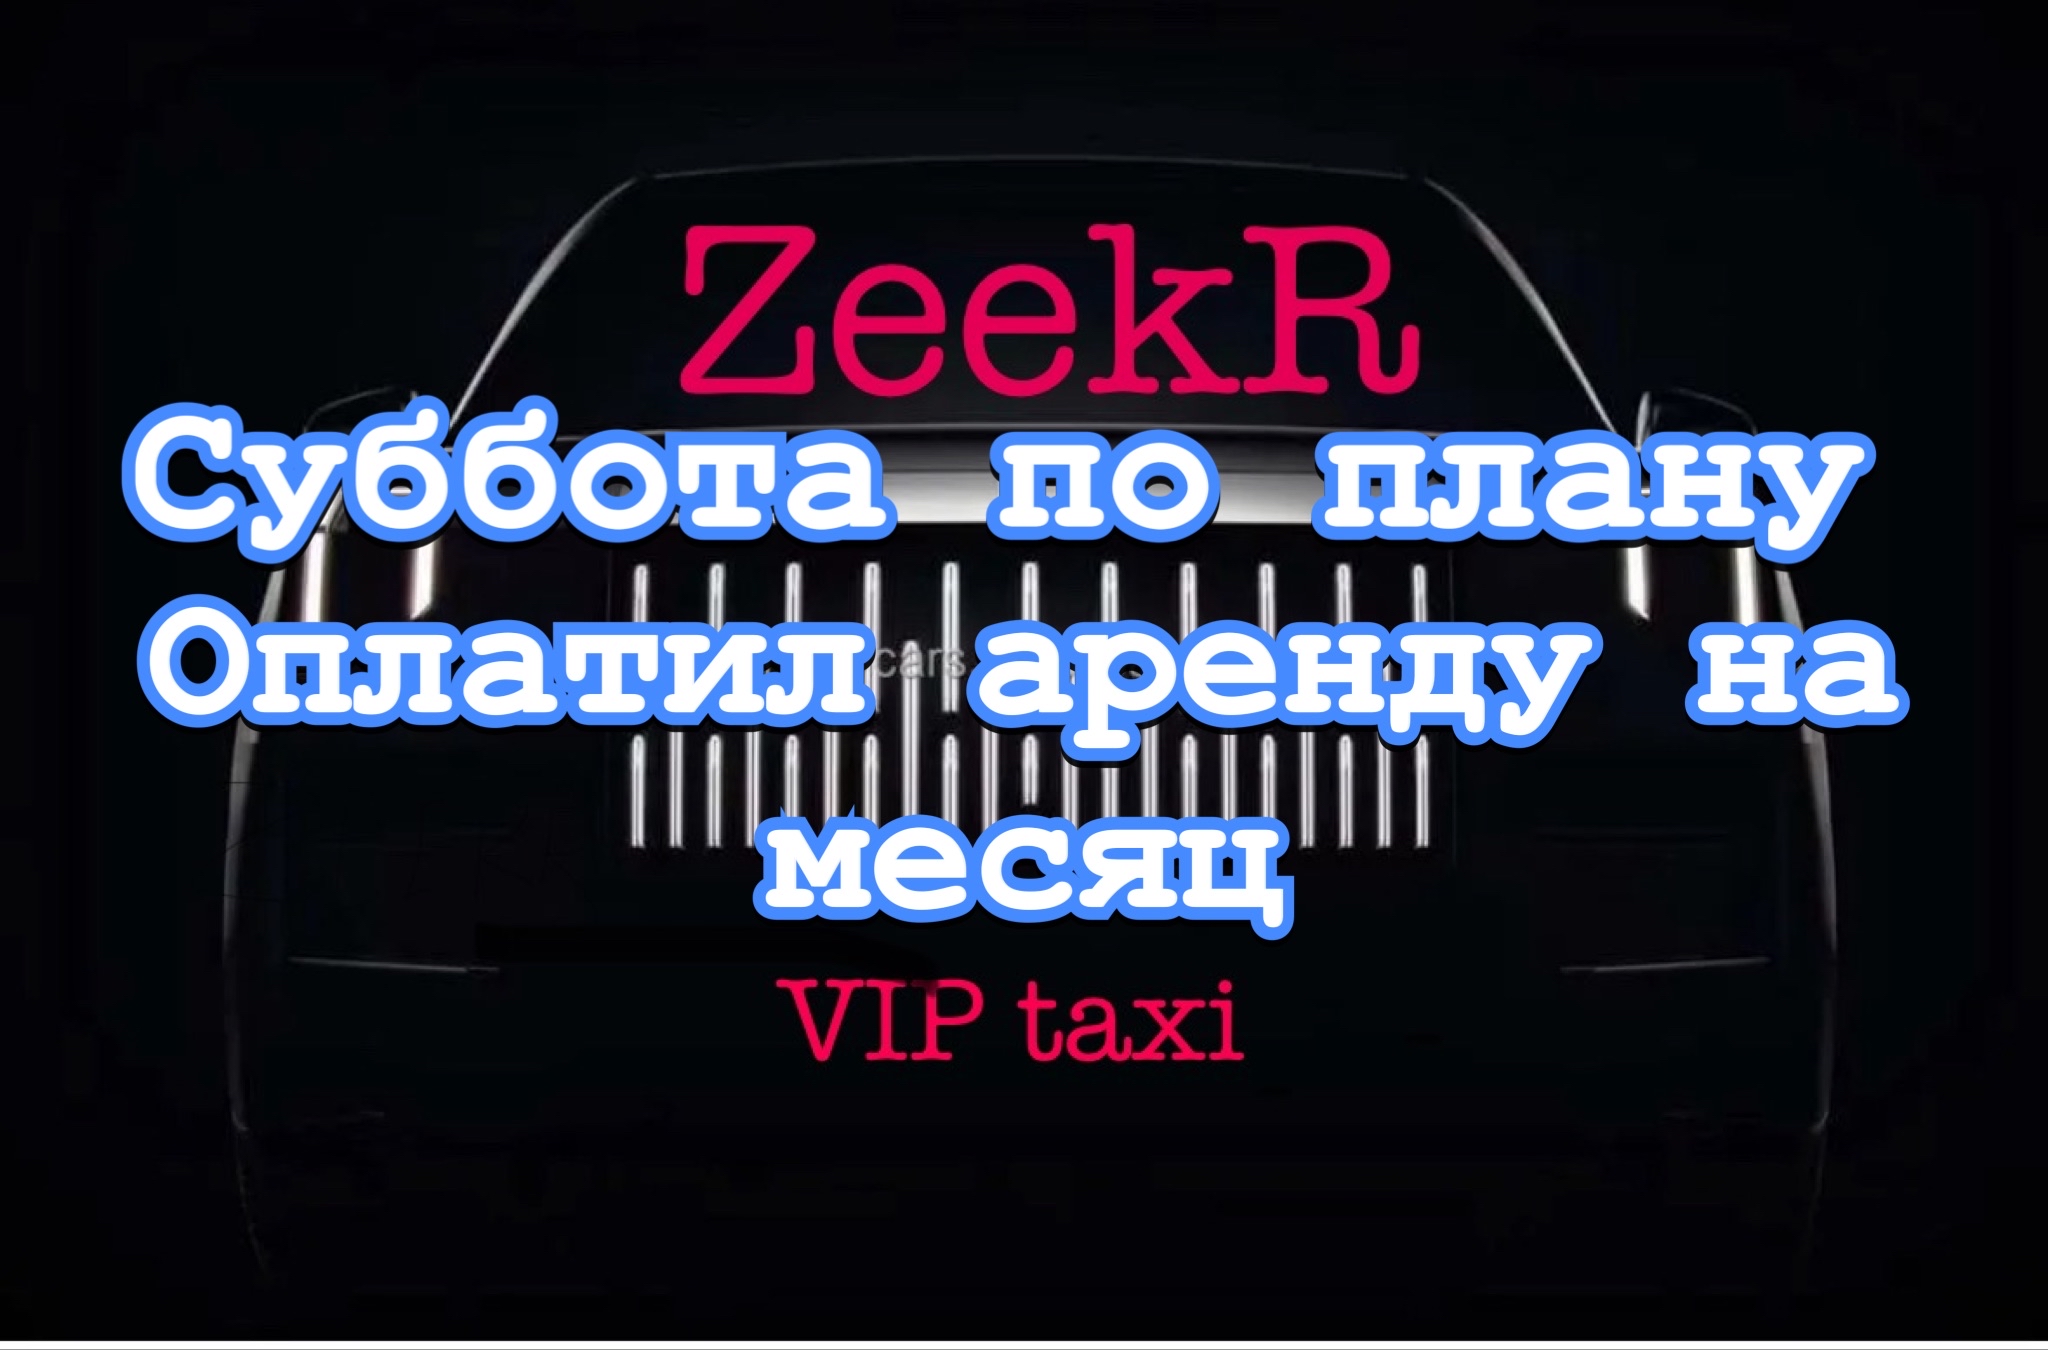 заплатил аренду на месяц  /таксую на zeekr009/elite taxi/тариф элит/рабочая смена/яндекс такси